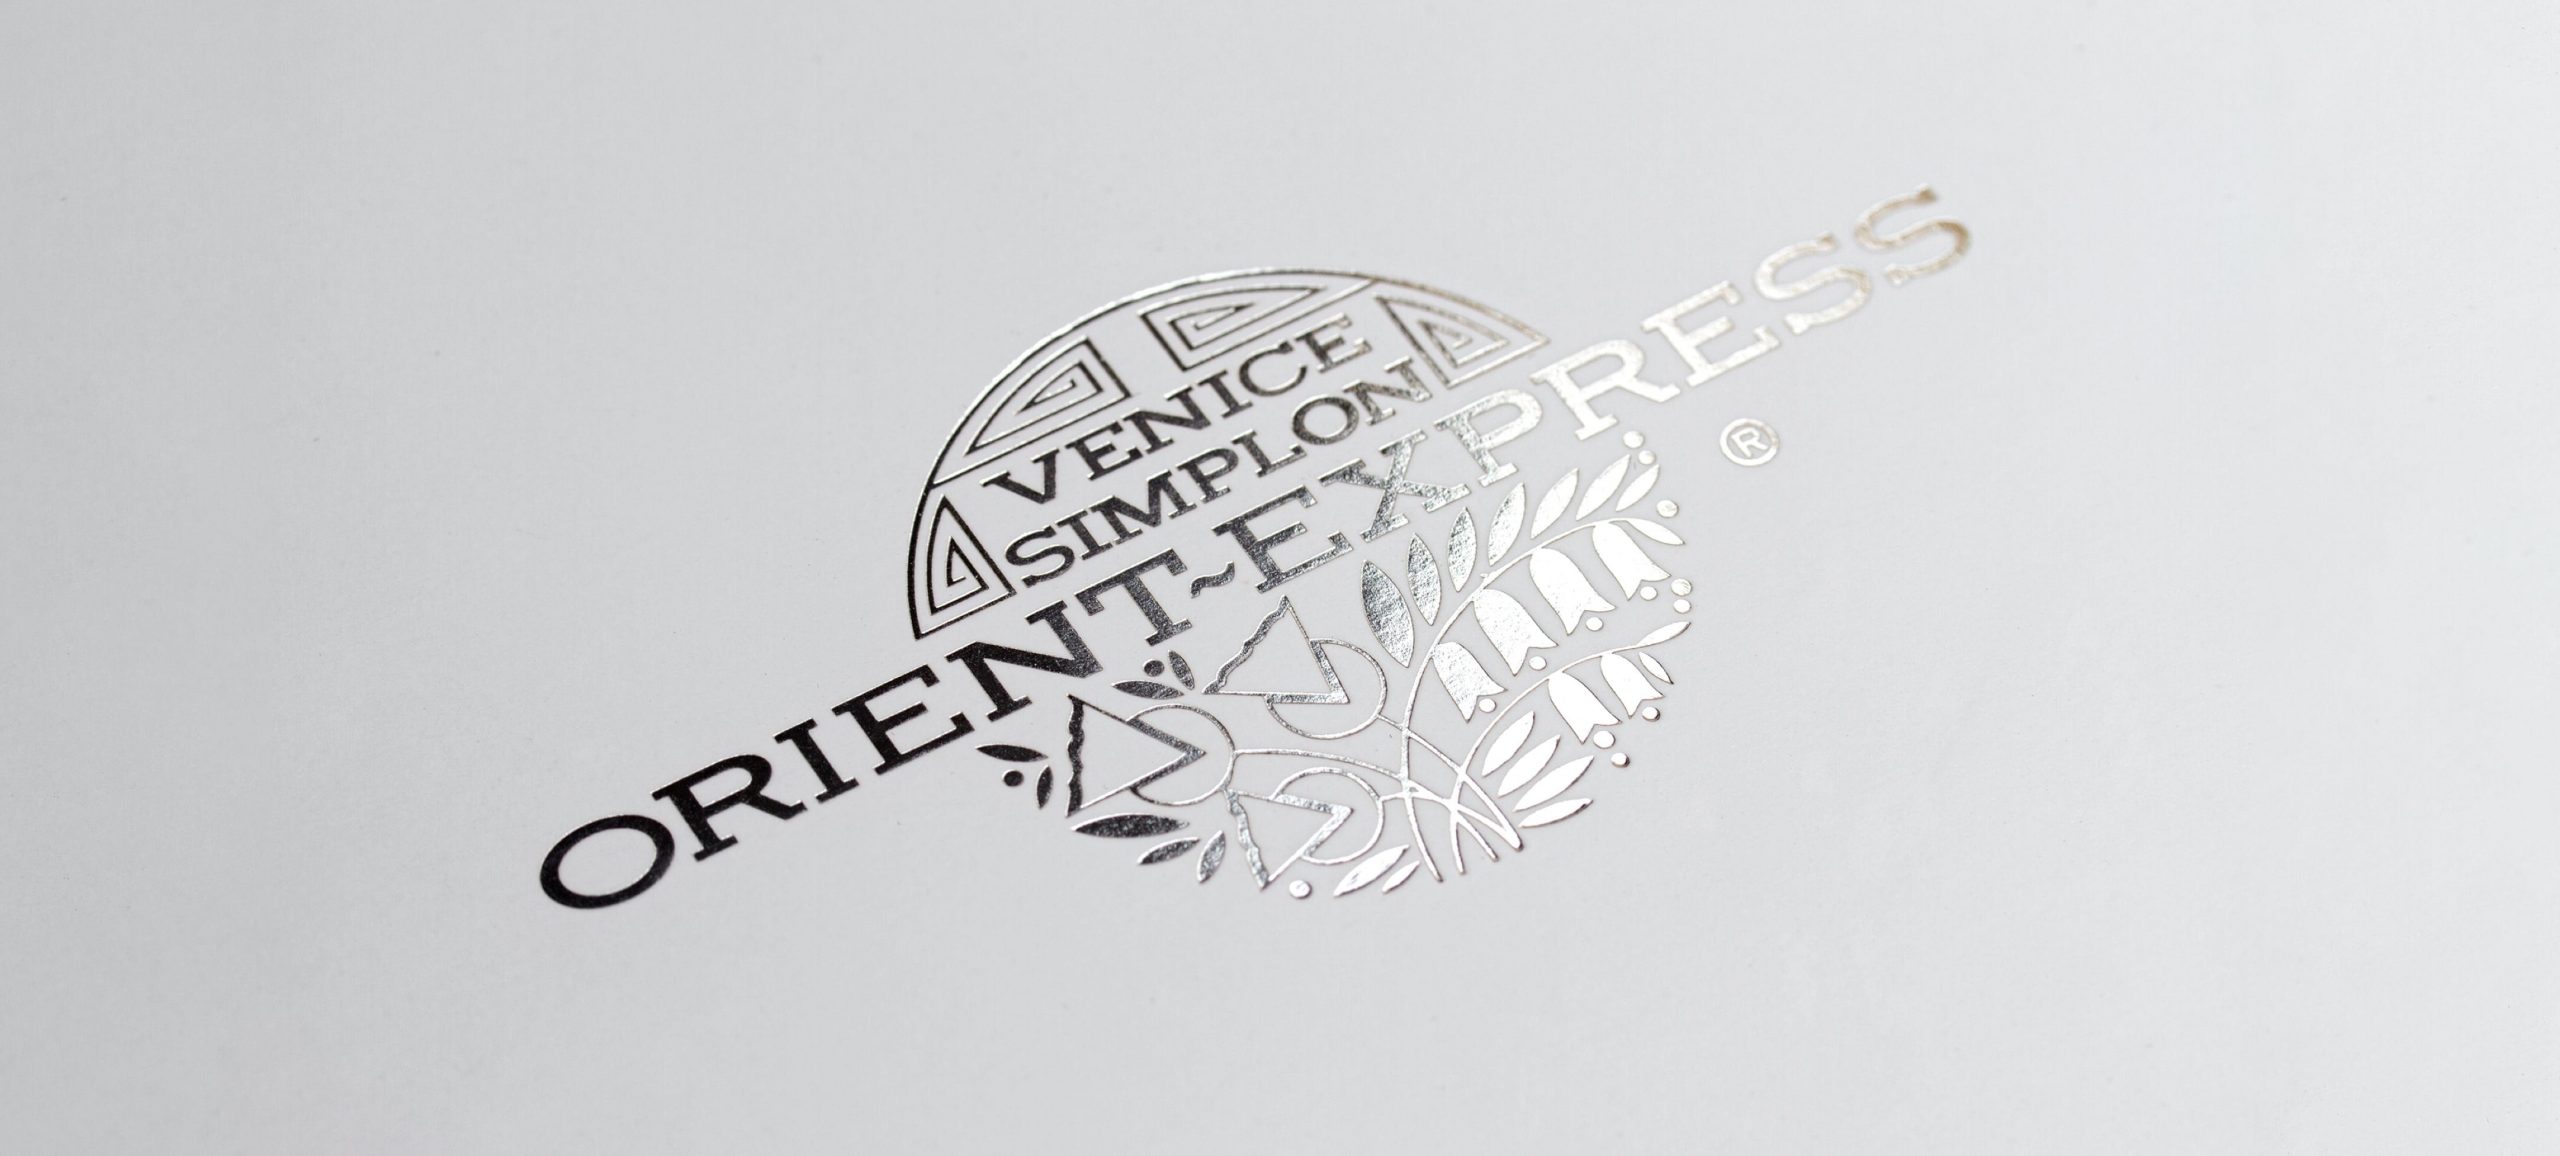 Orient -Express logo in silver foil